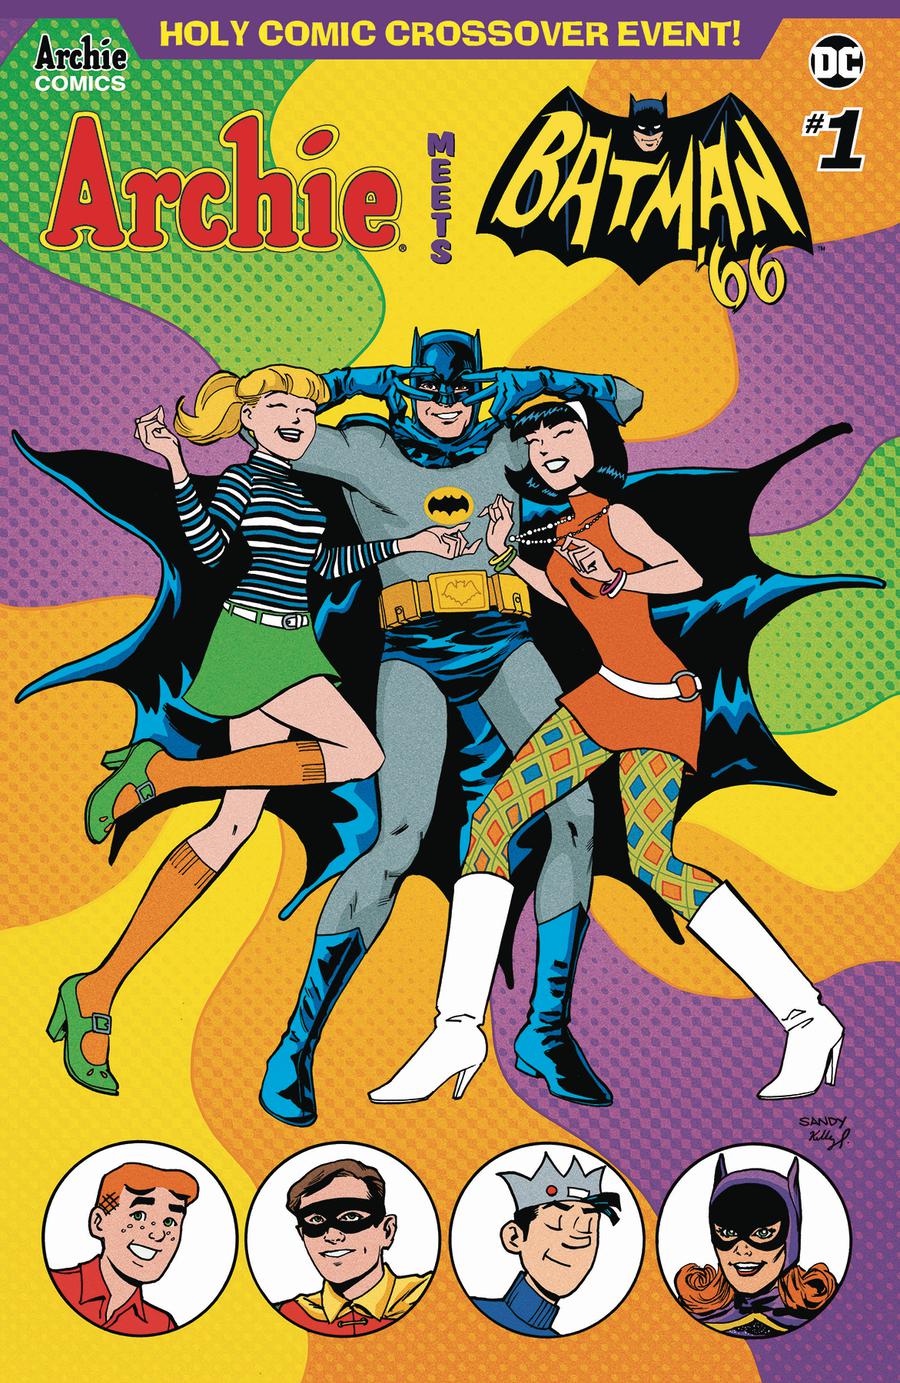 Archie Meets Batman 66 #1 Cover D Variant Sandy Jarrell & Kelly Fitzpatrick Cover